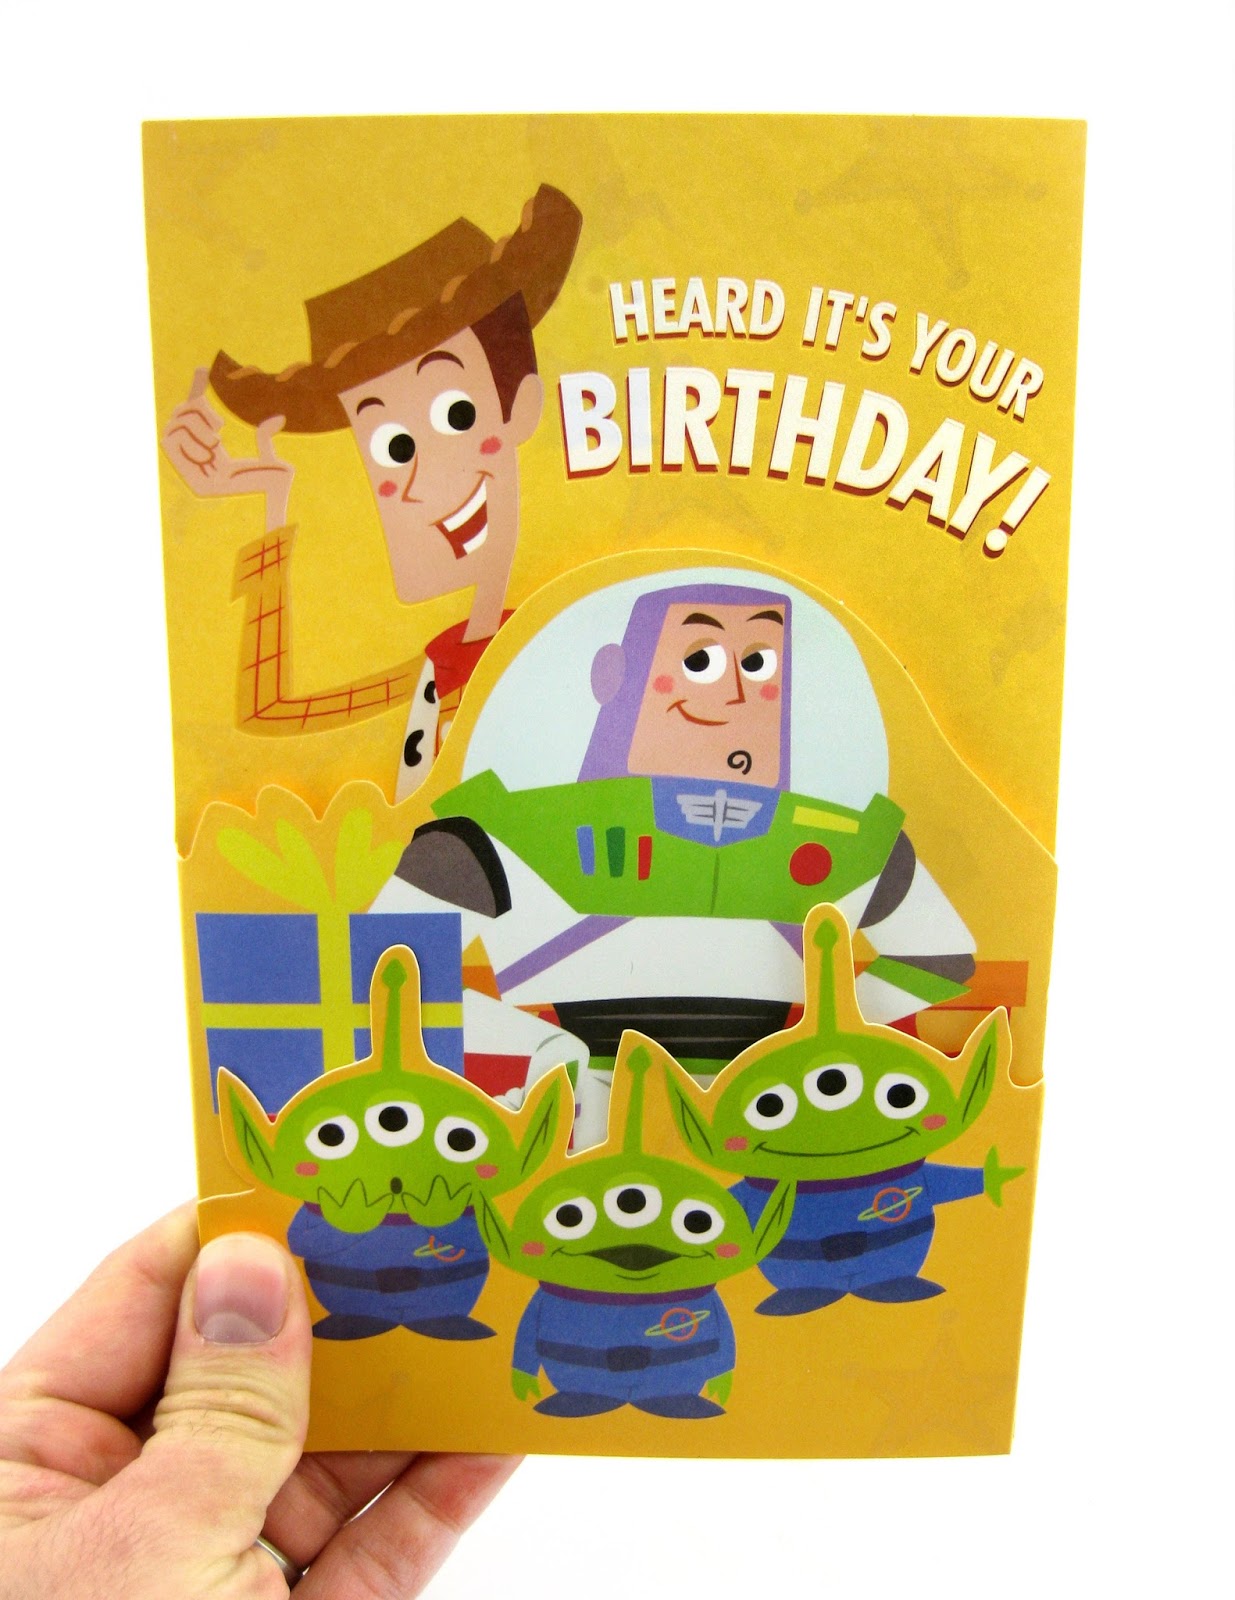 dan-the-pixar-fan-toy-story-birthday-card-target-2016